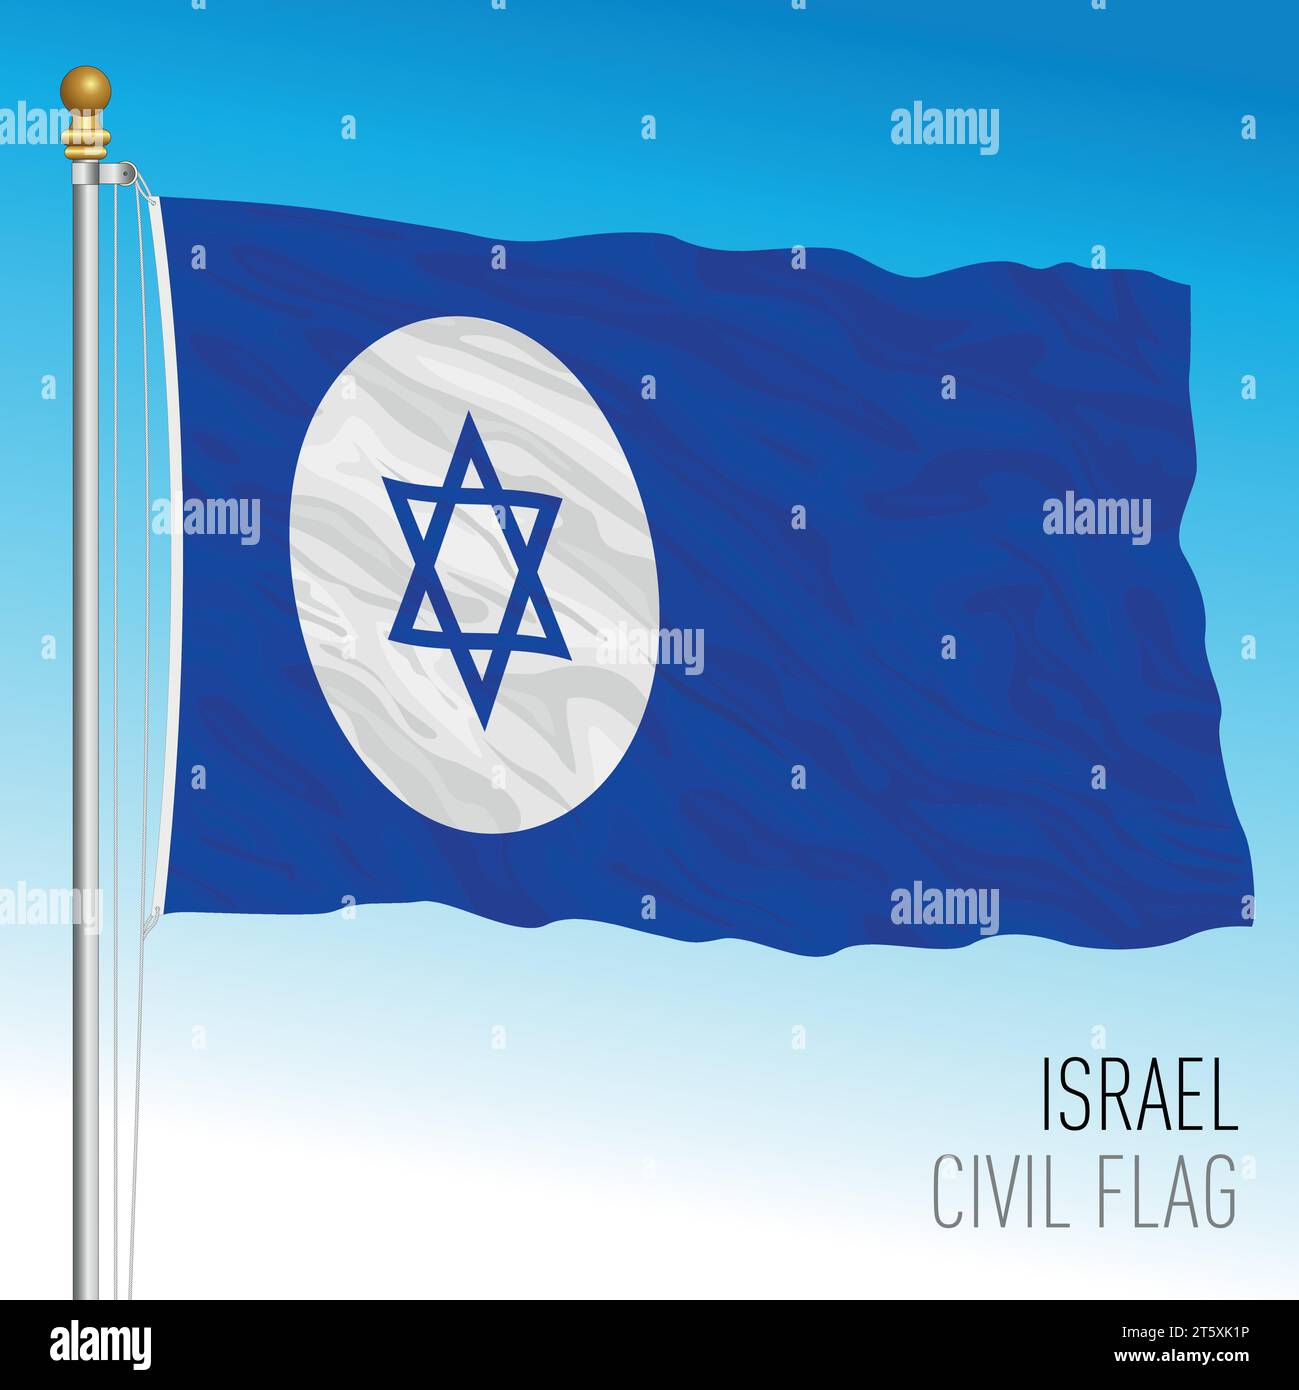 Israel Civil waving flag, middle east, vector illustration Stock Vector